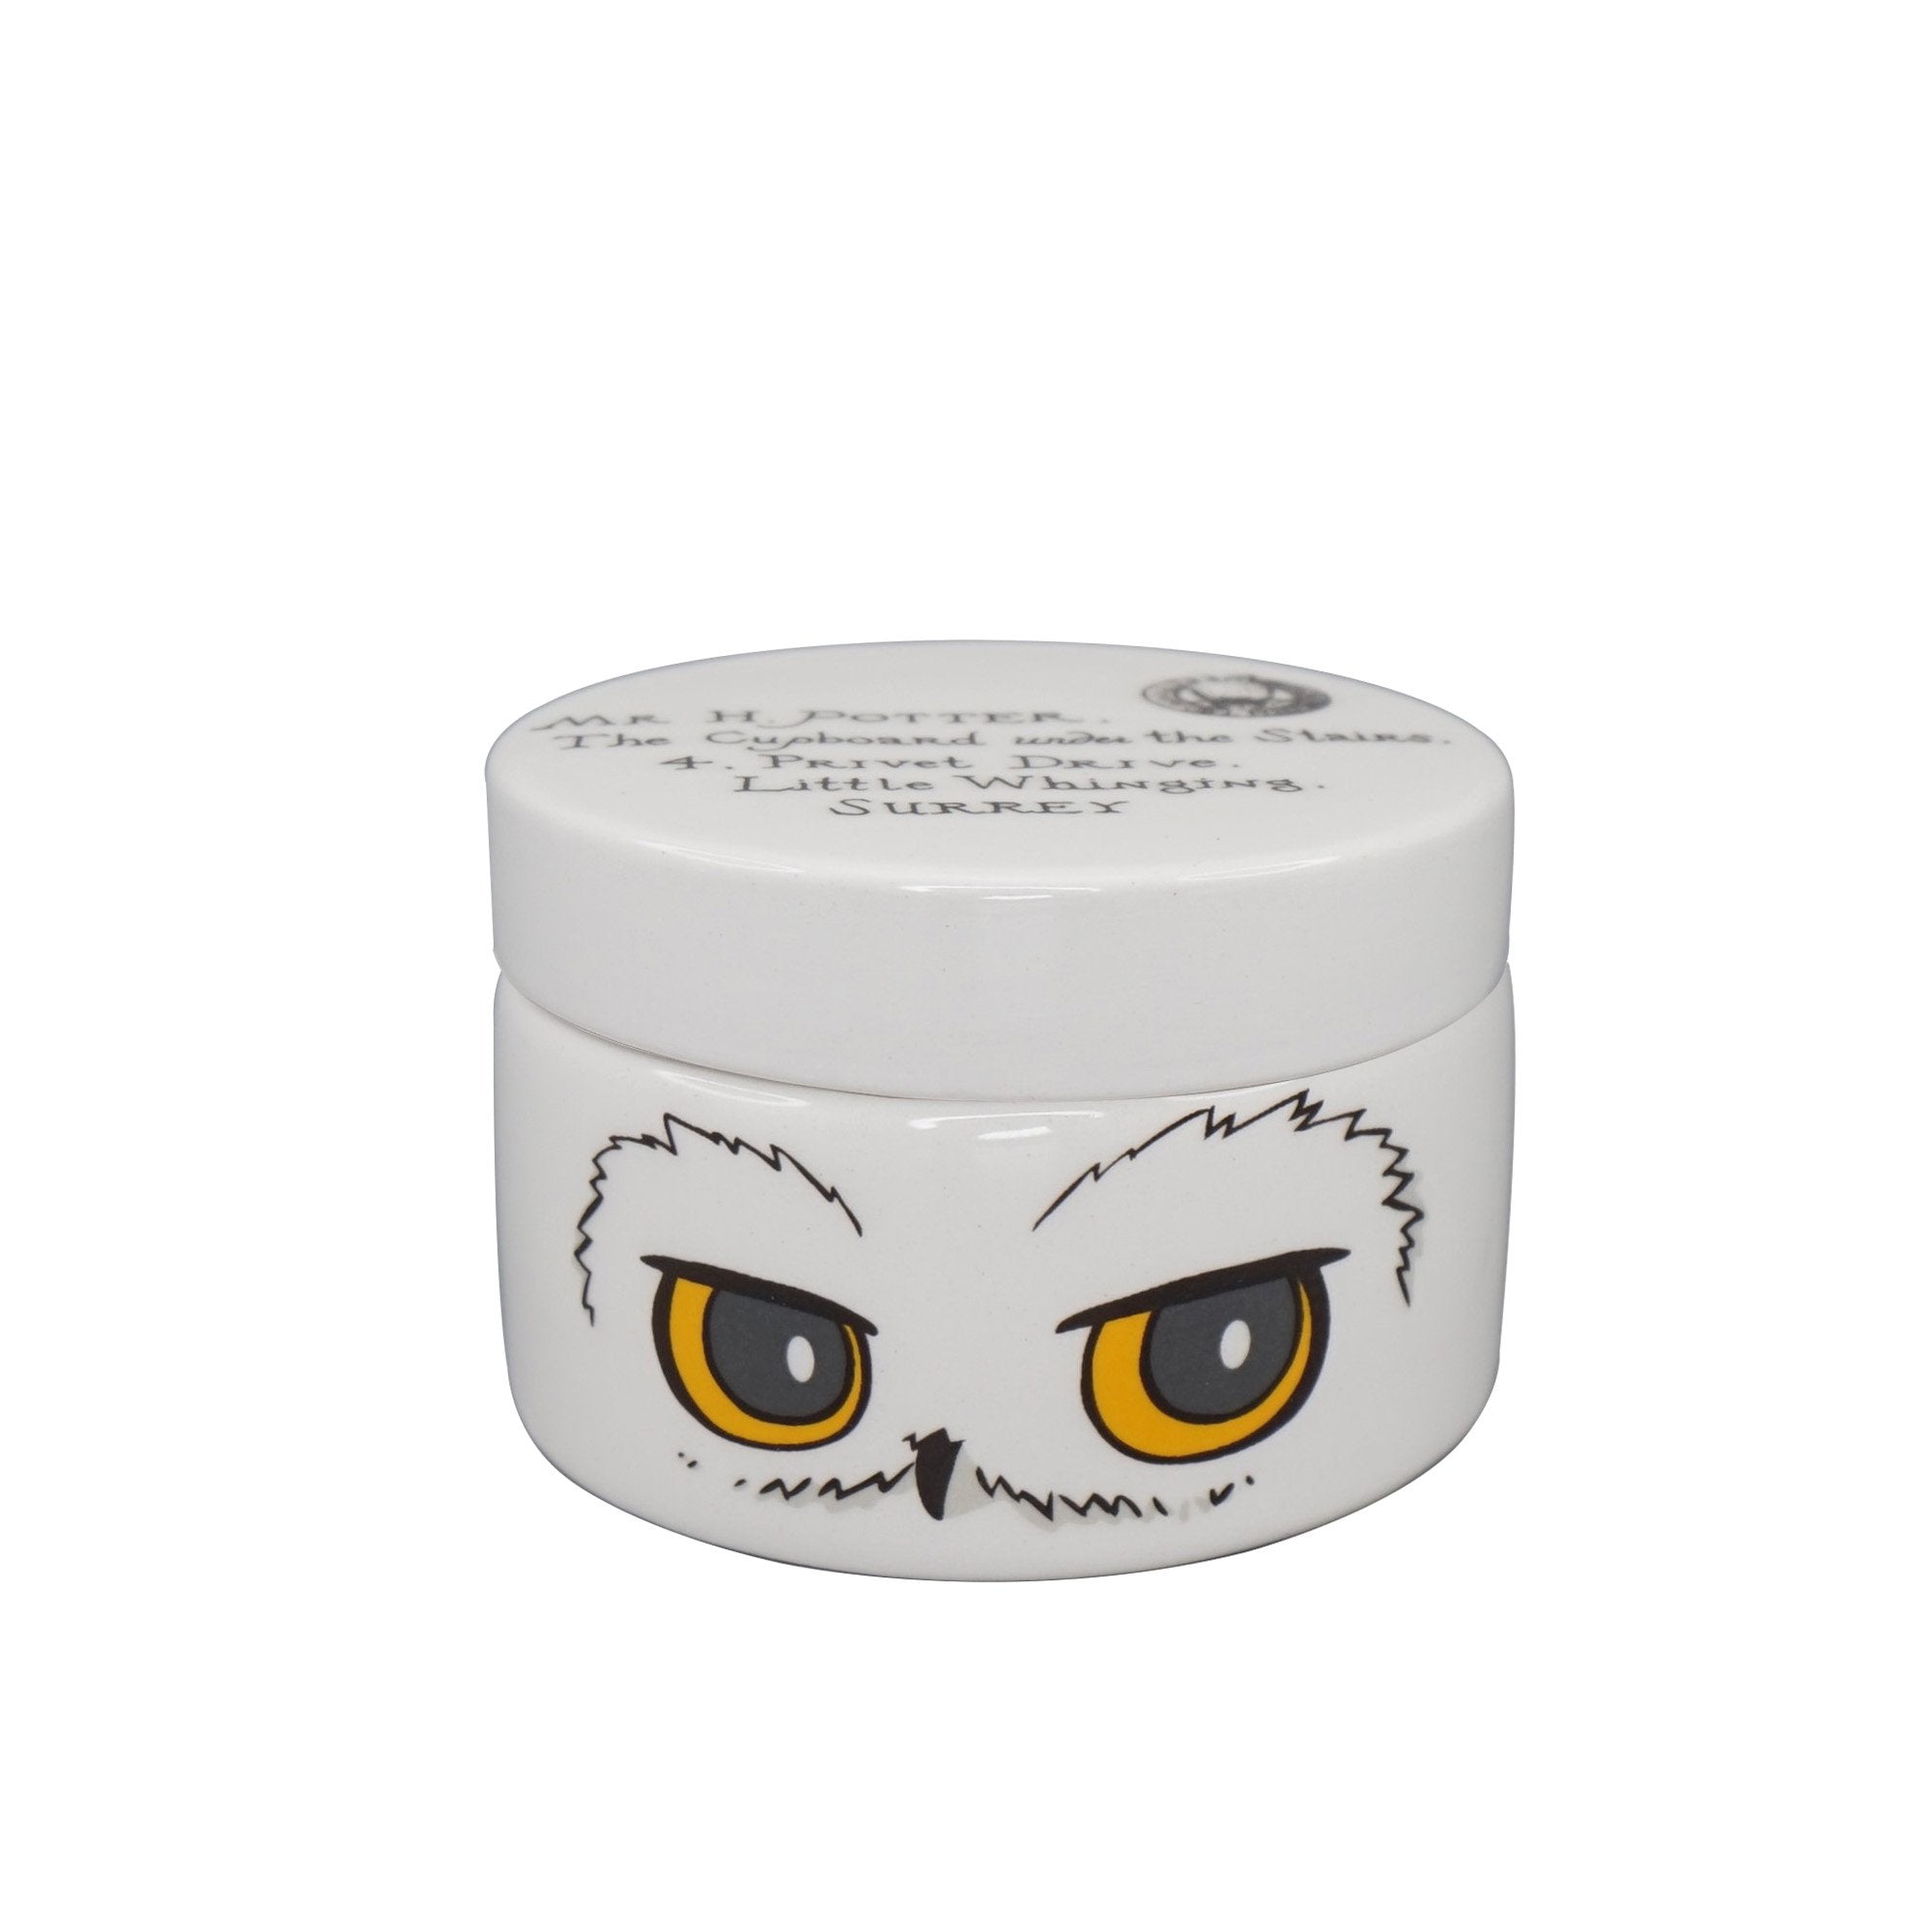 Box Round Ceramic (6cm) - Harry Potter (Hedwig)